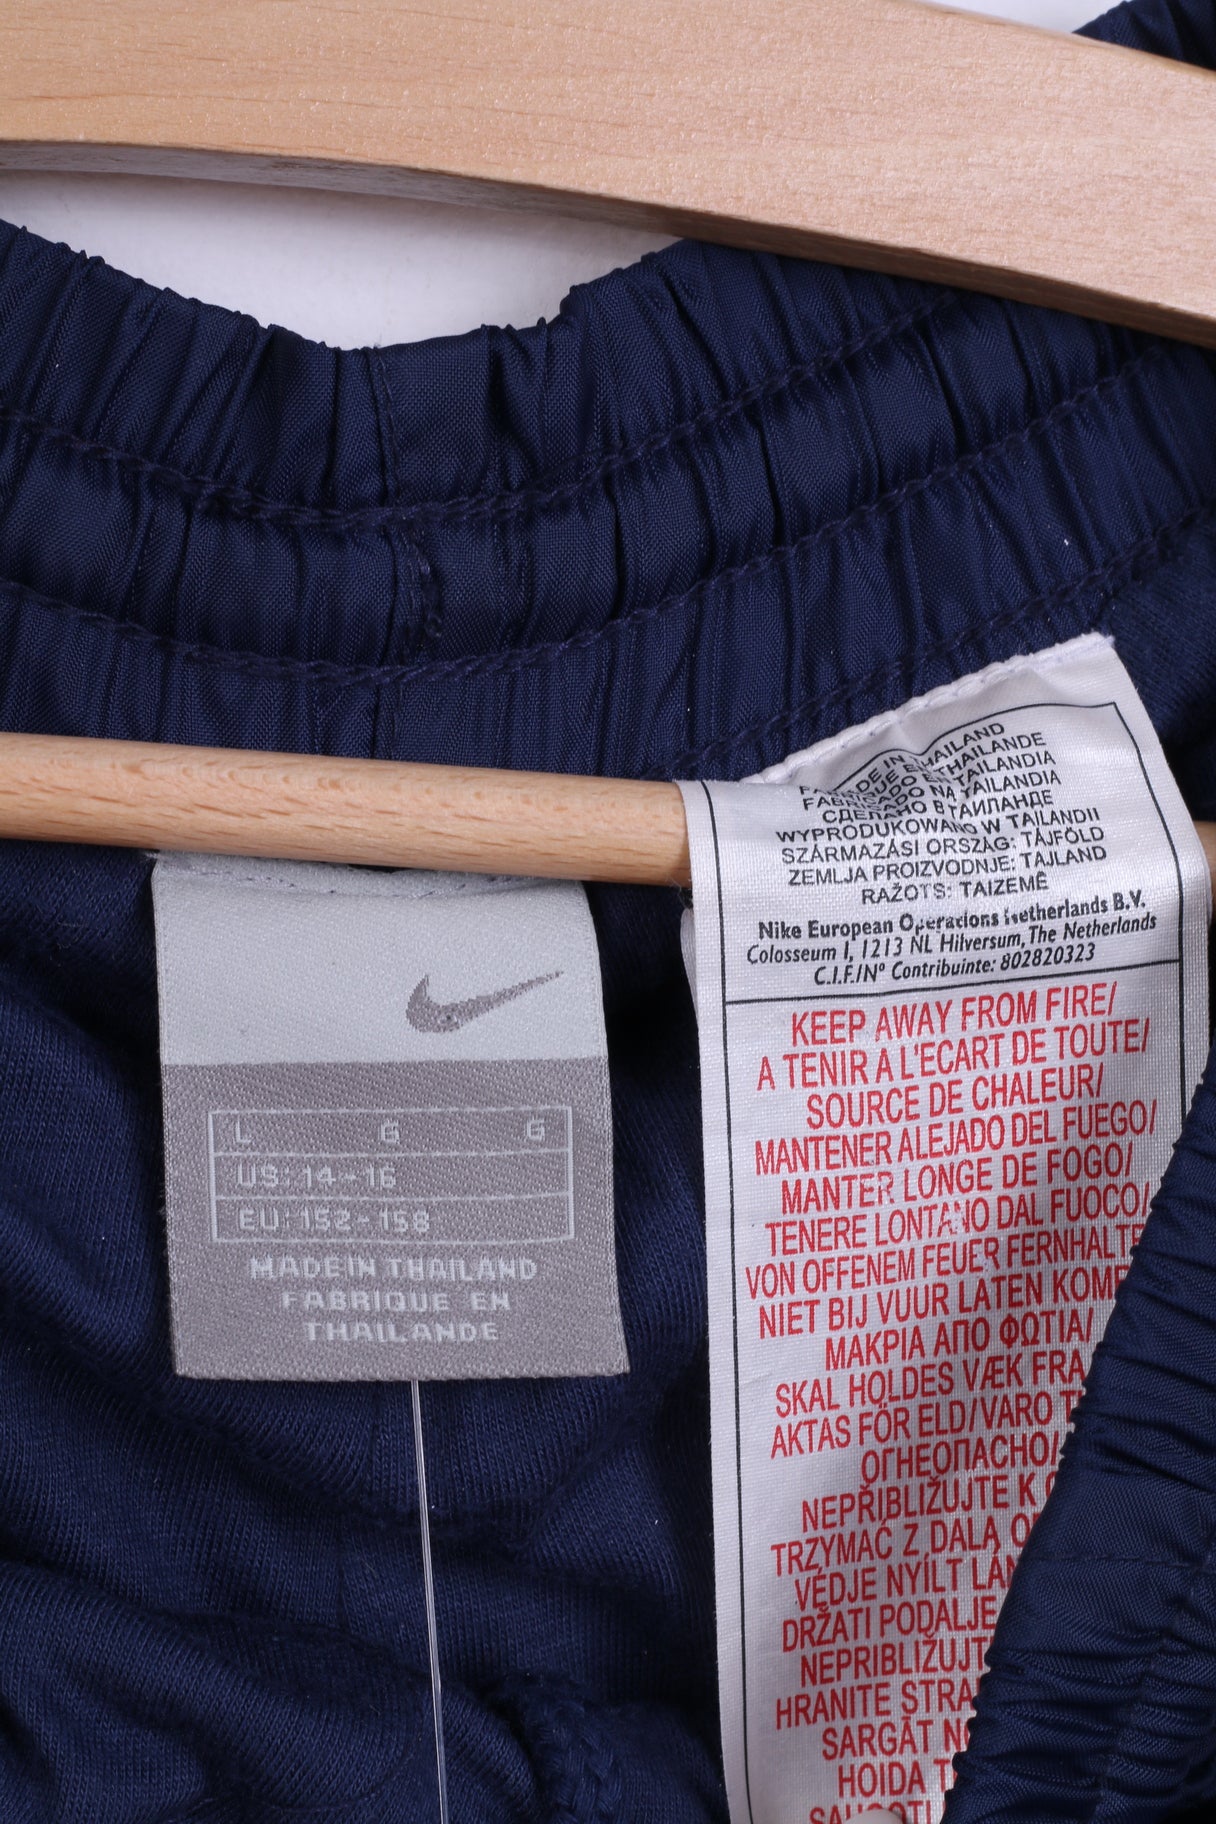 Nike Garçons L 152- 158 Pantalon Bas Survêtement Marine Pantalon Sport